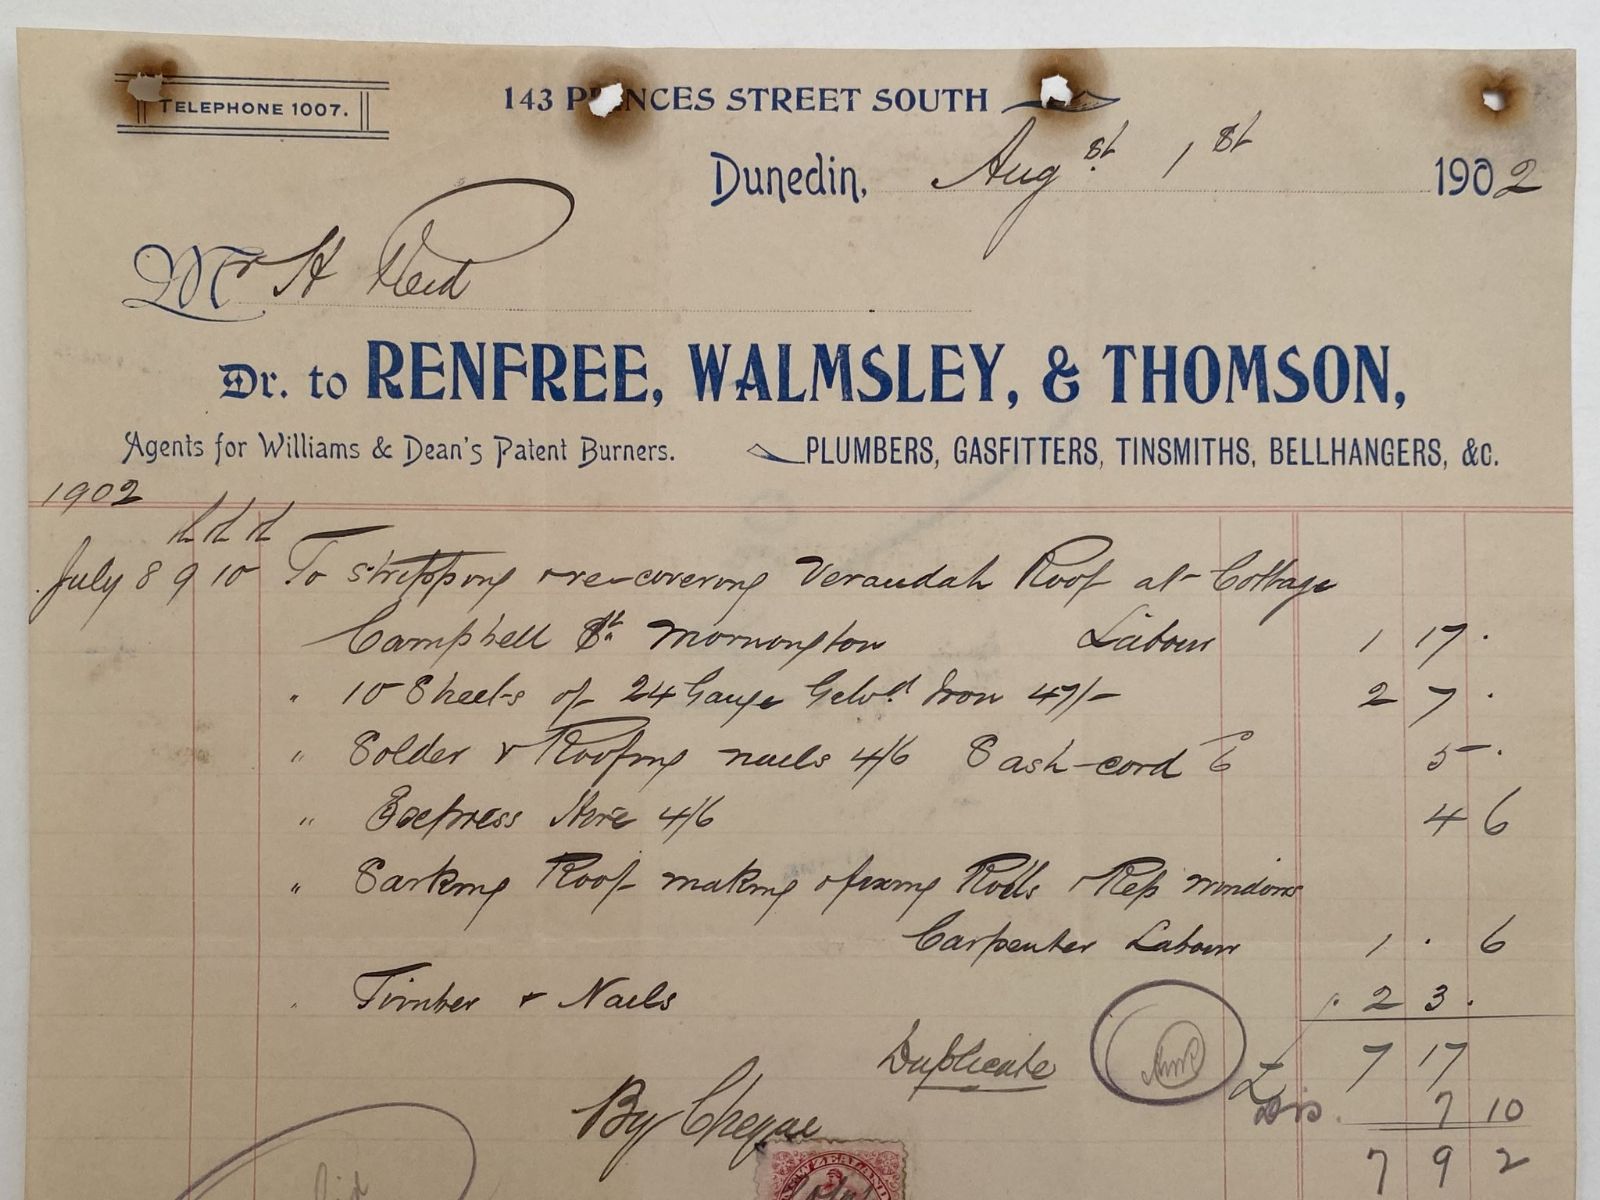 OLD INVOICE: Renfree, Walmsley & Thomson - Plumbers. Dunedin 1902 (120 yo)